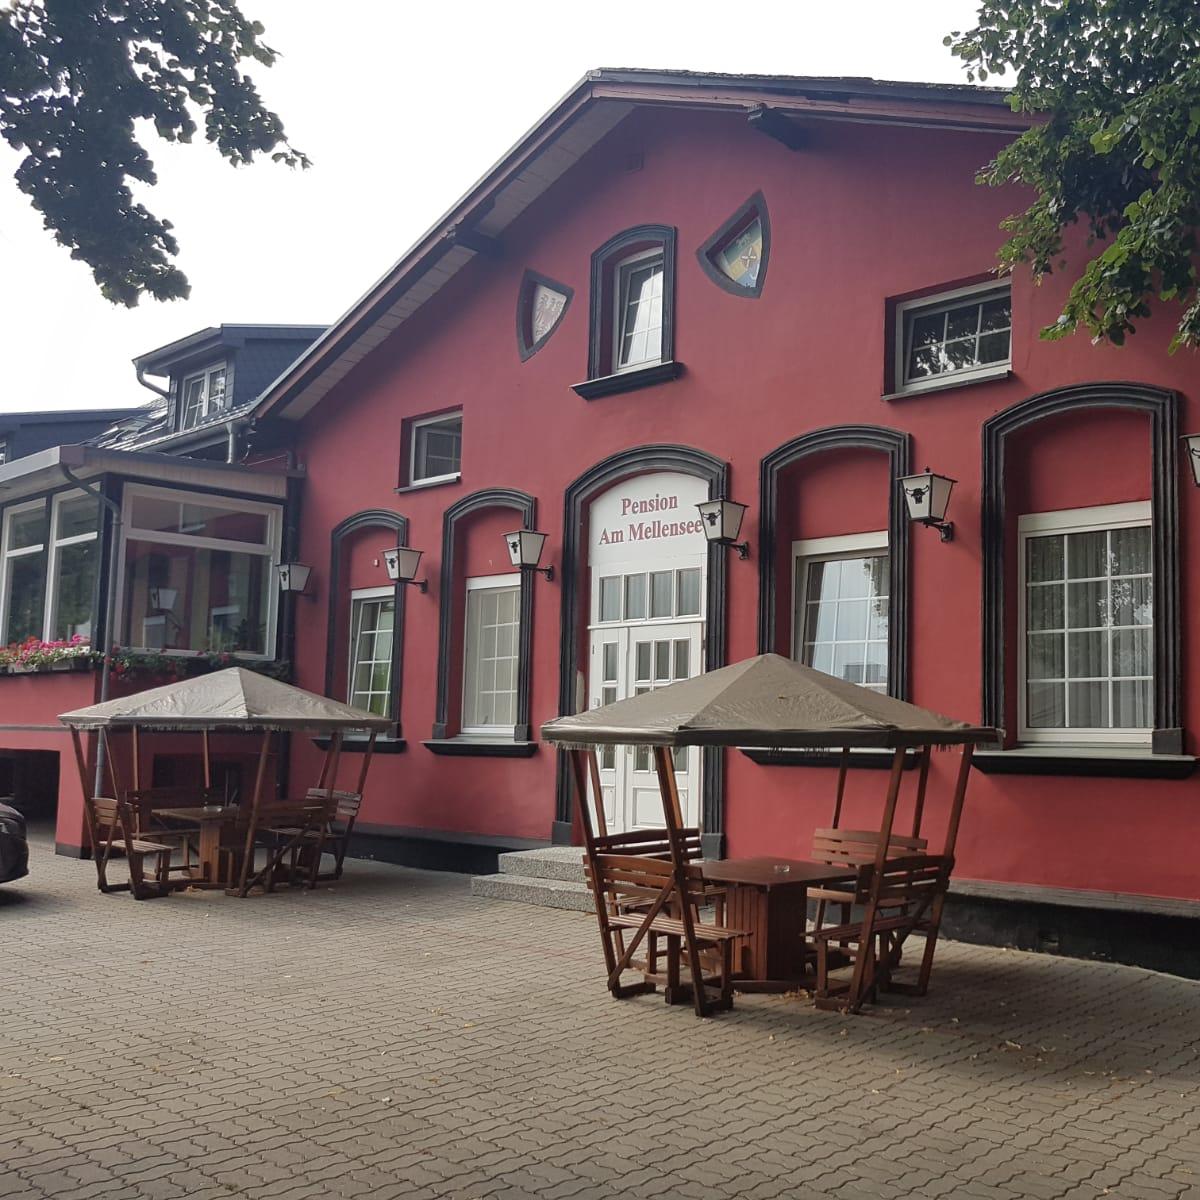 Restaurant "Pension" in Am Mellensee